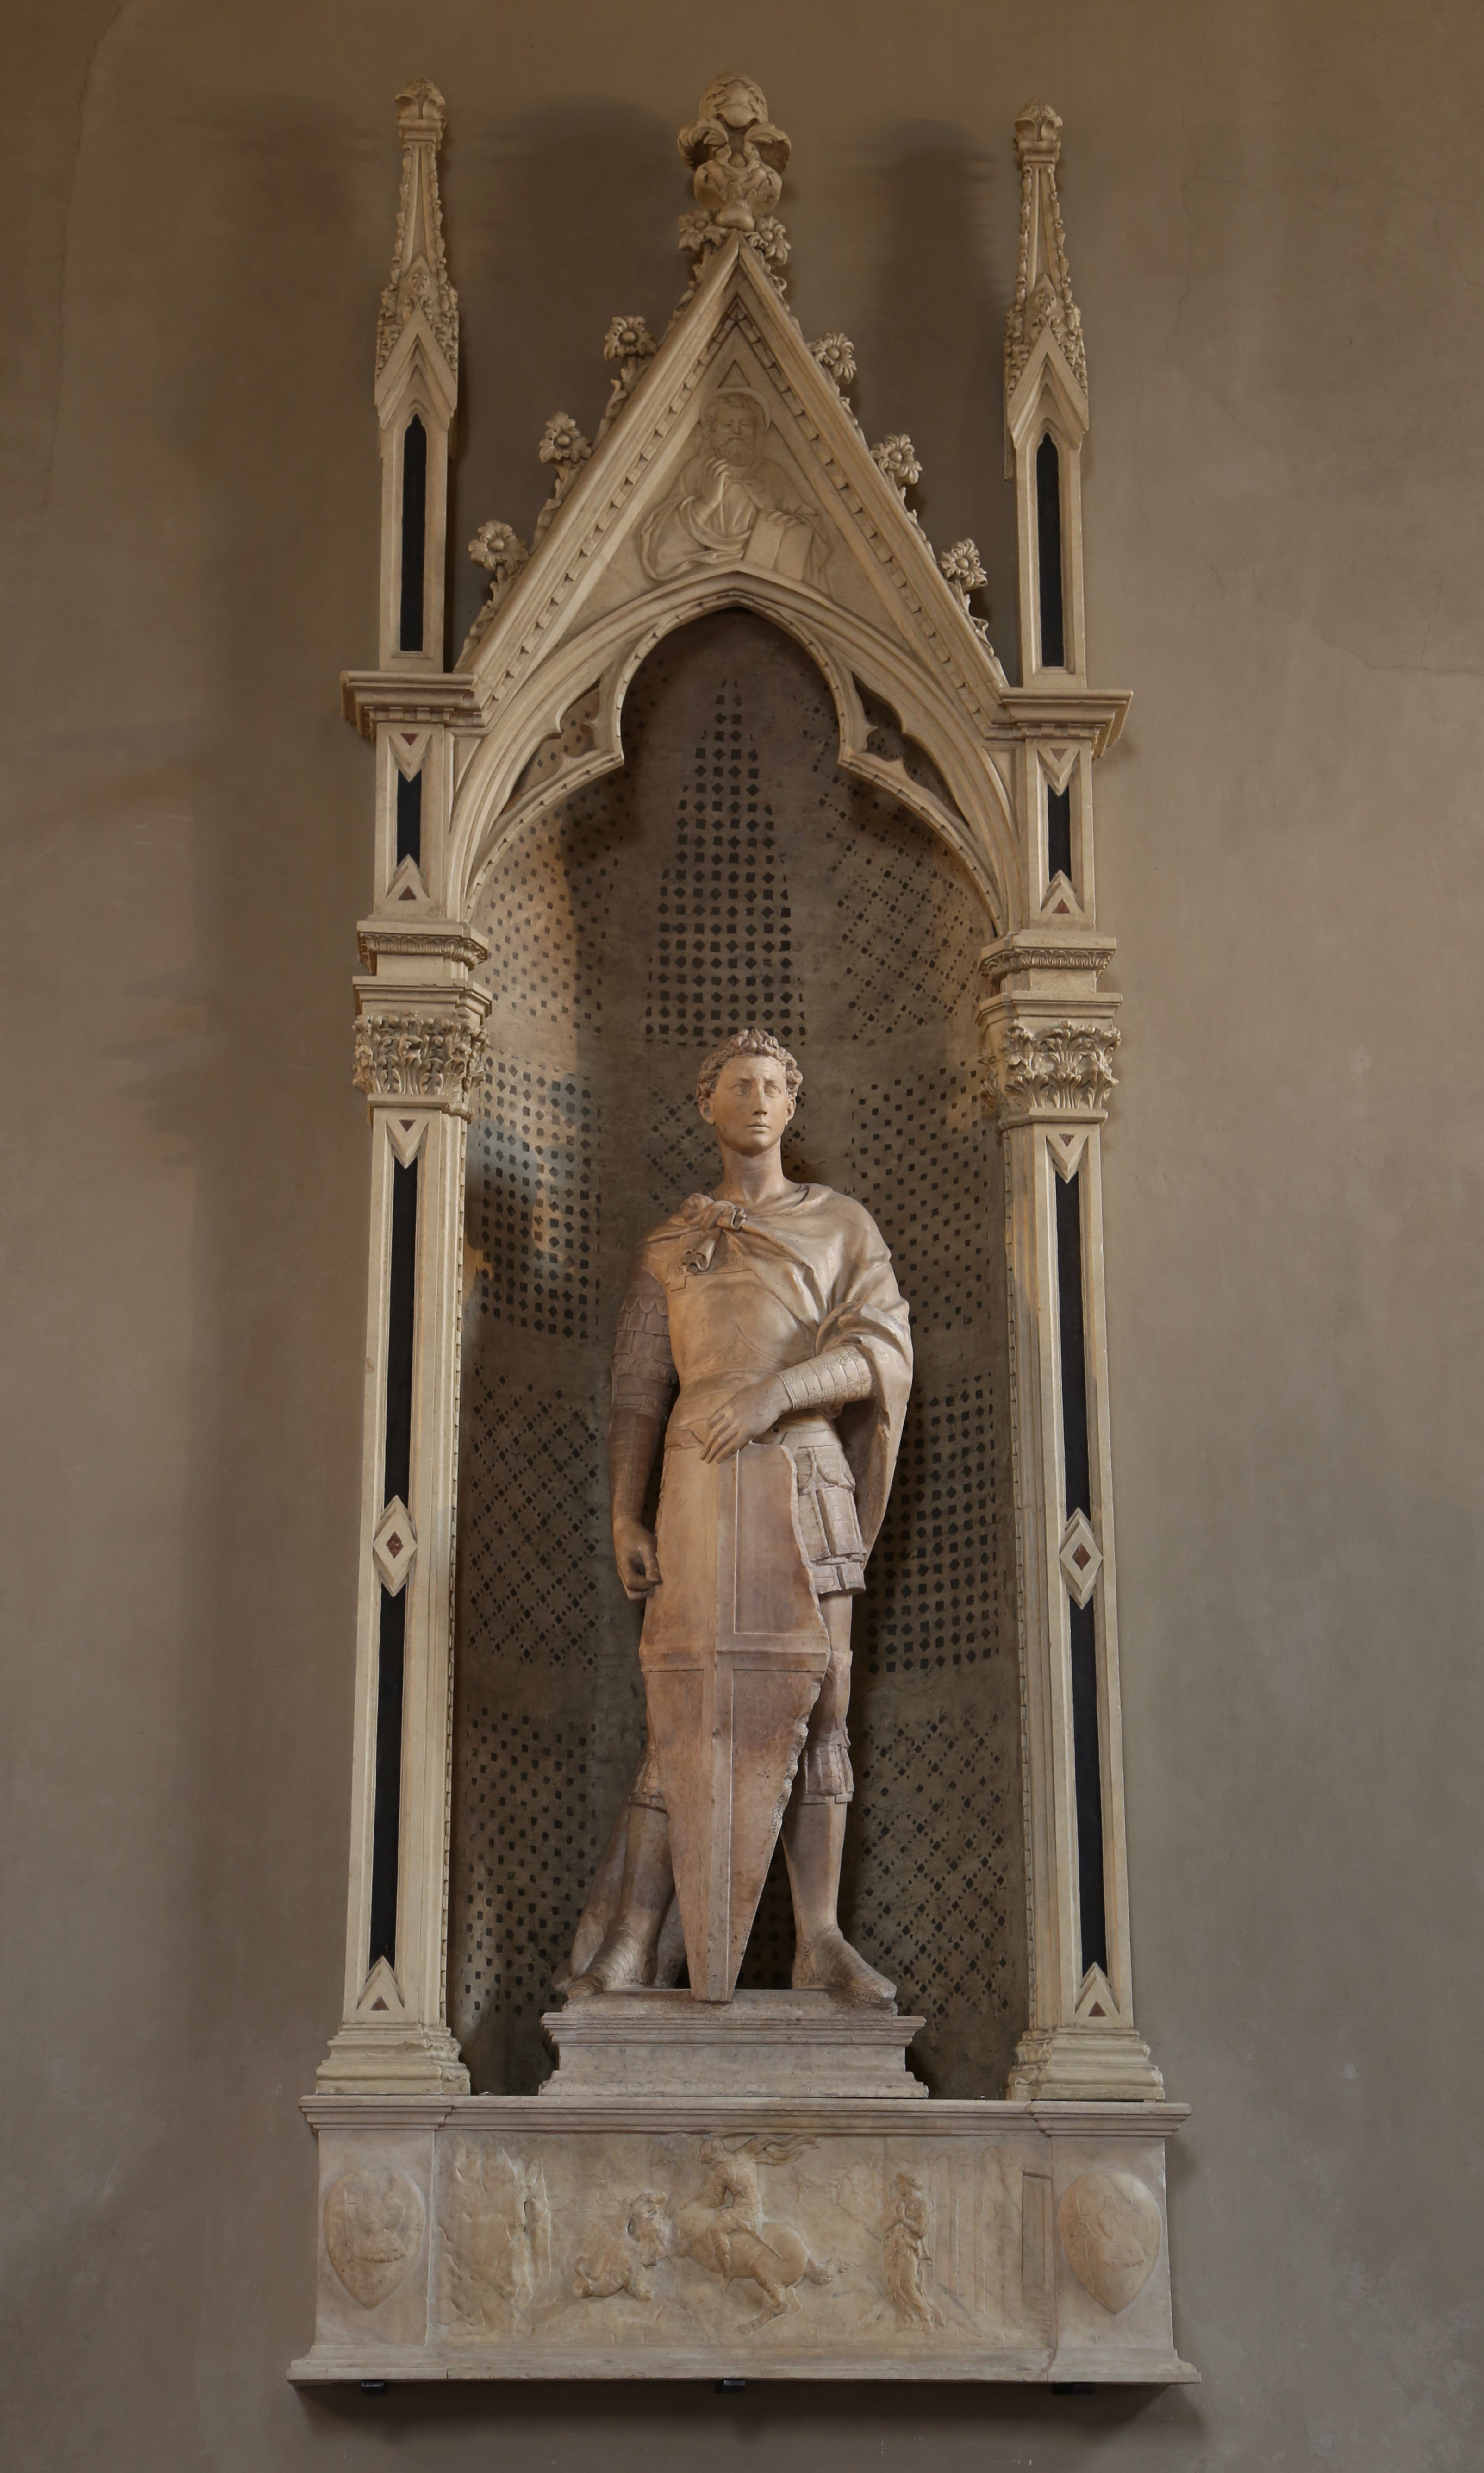 Saint George statue or armor